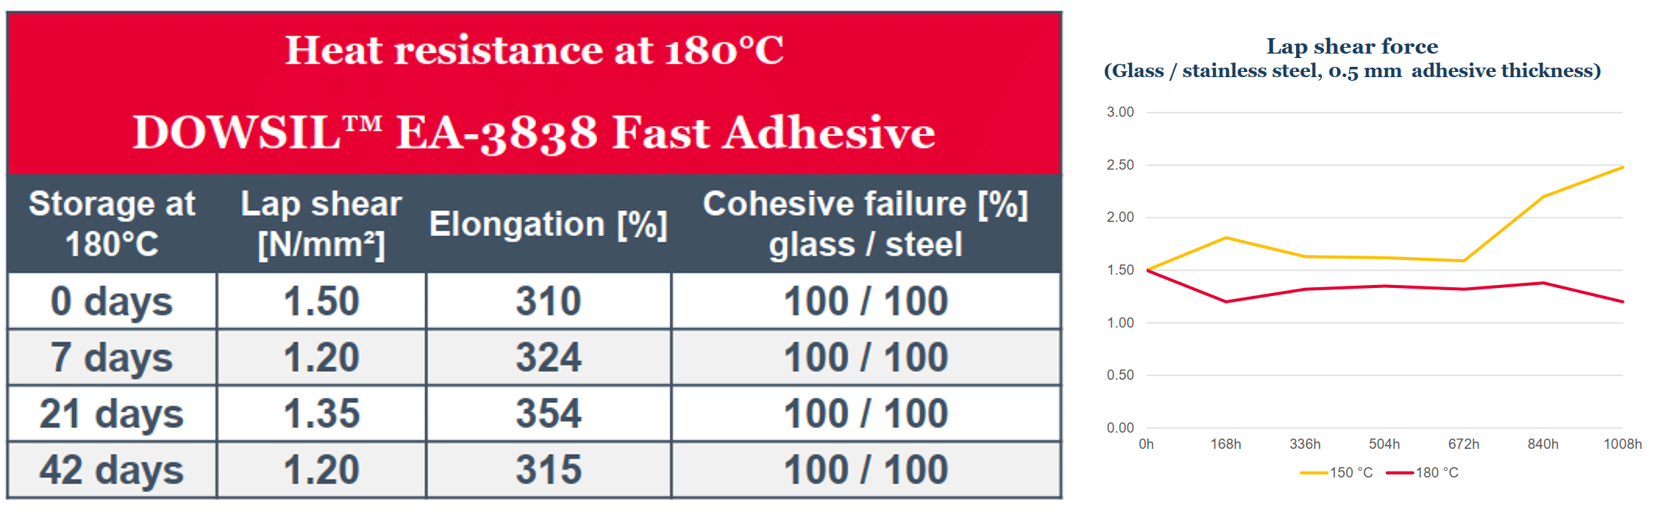 DOWSIL™ EA-3838 Fast Adhesive_heat resistance 1t 180